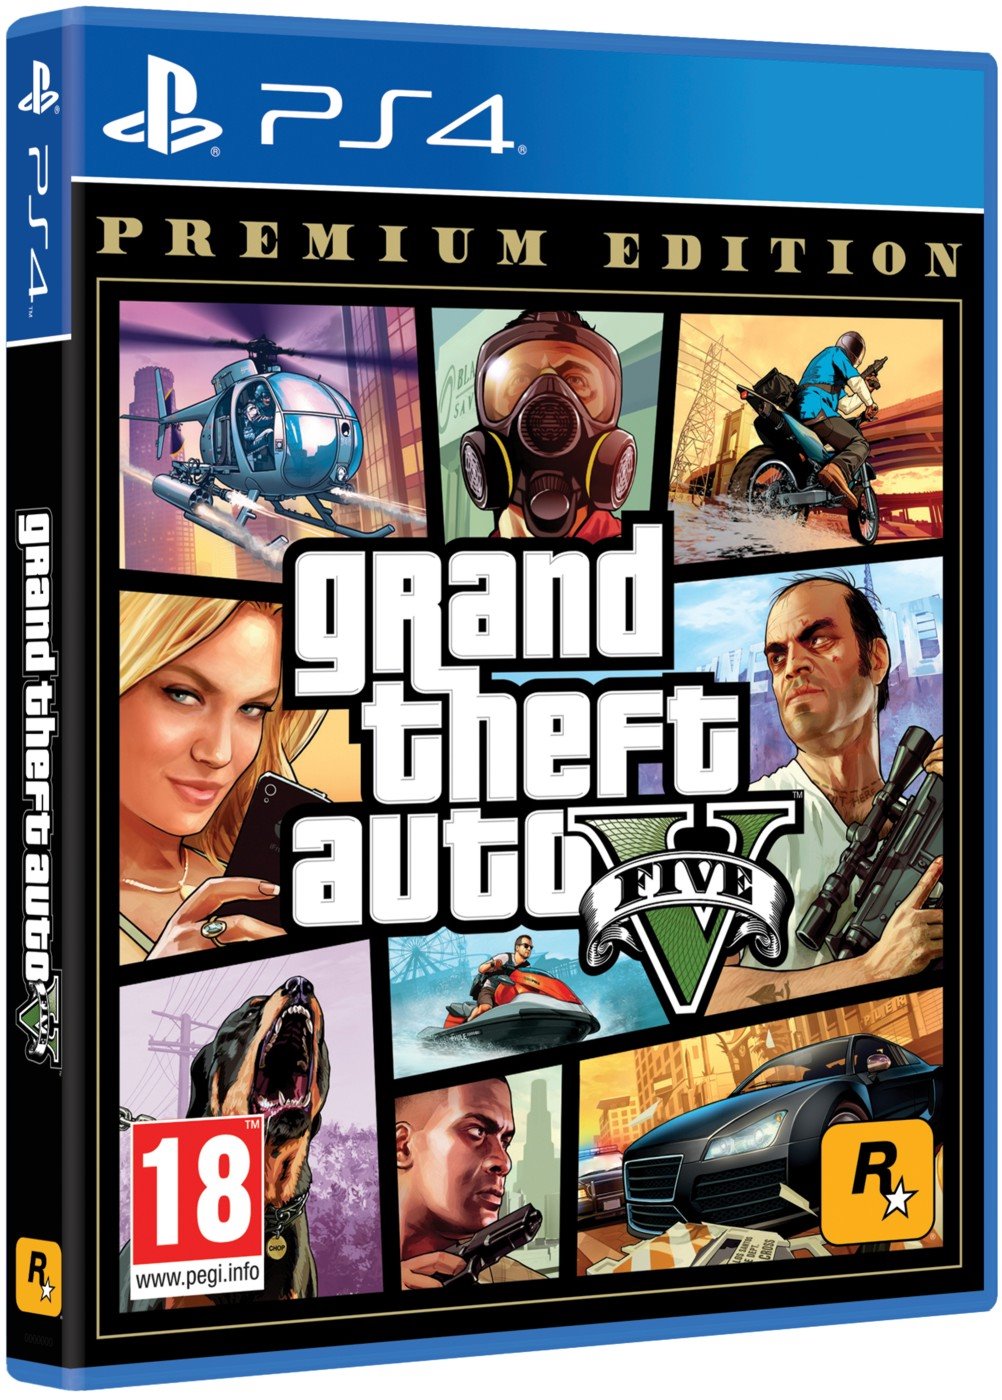 download the new Grand Theft Auto V: Premium Edition